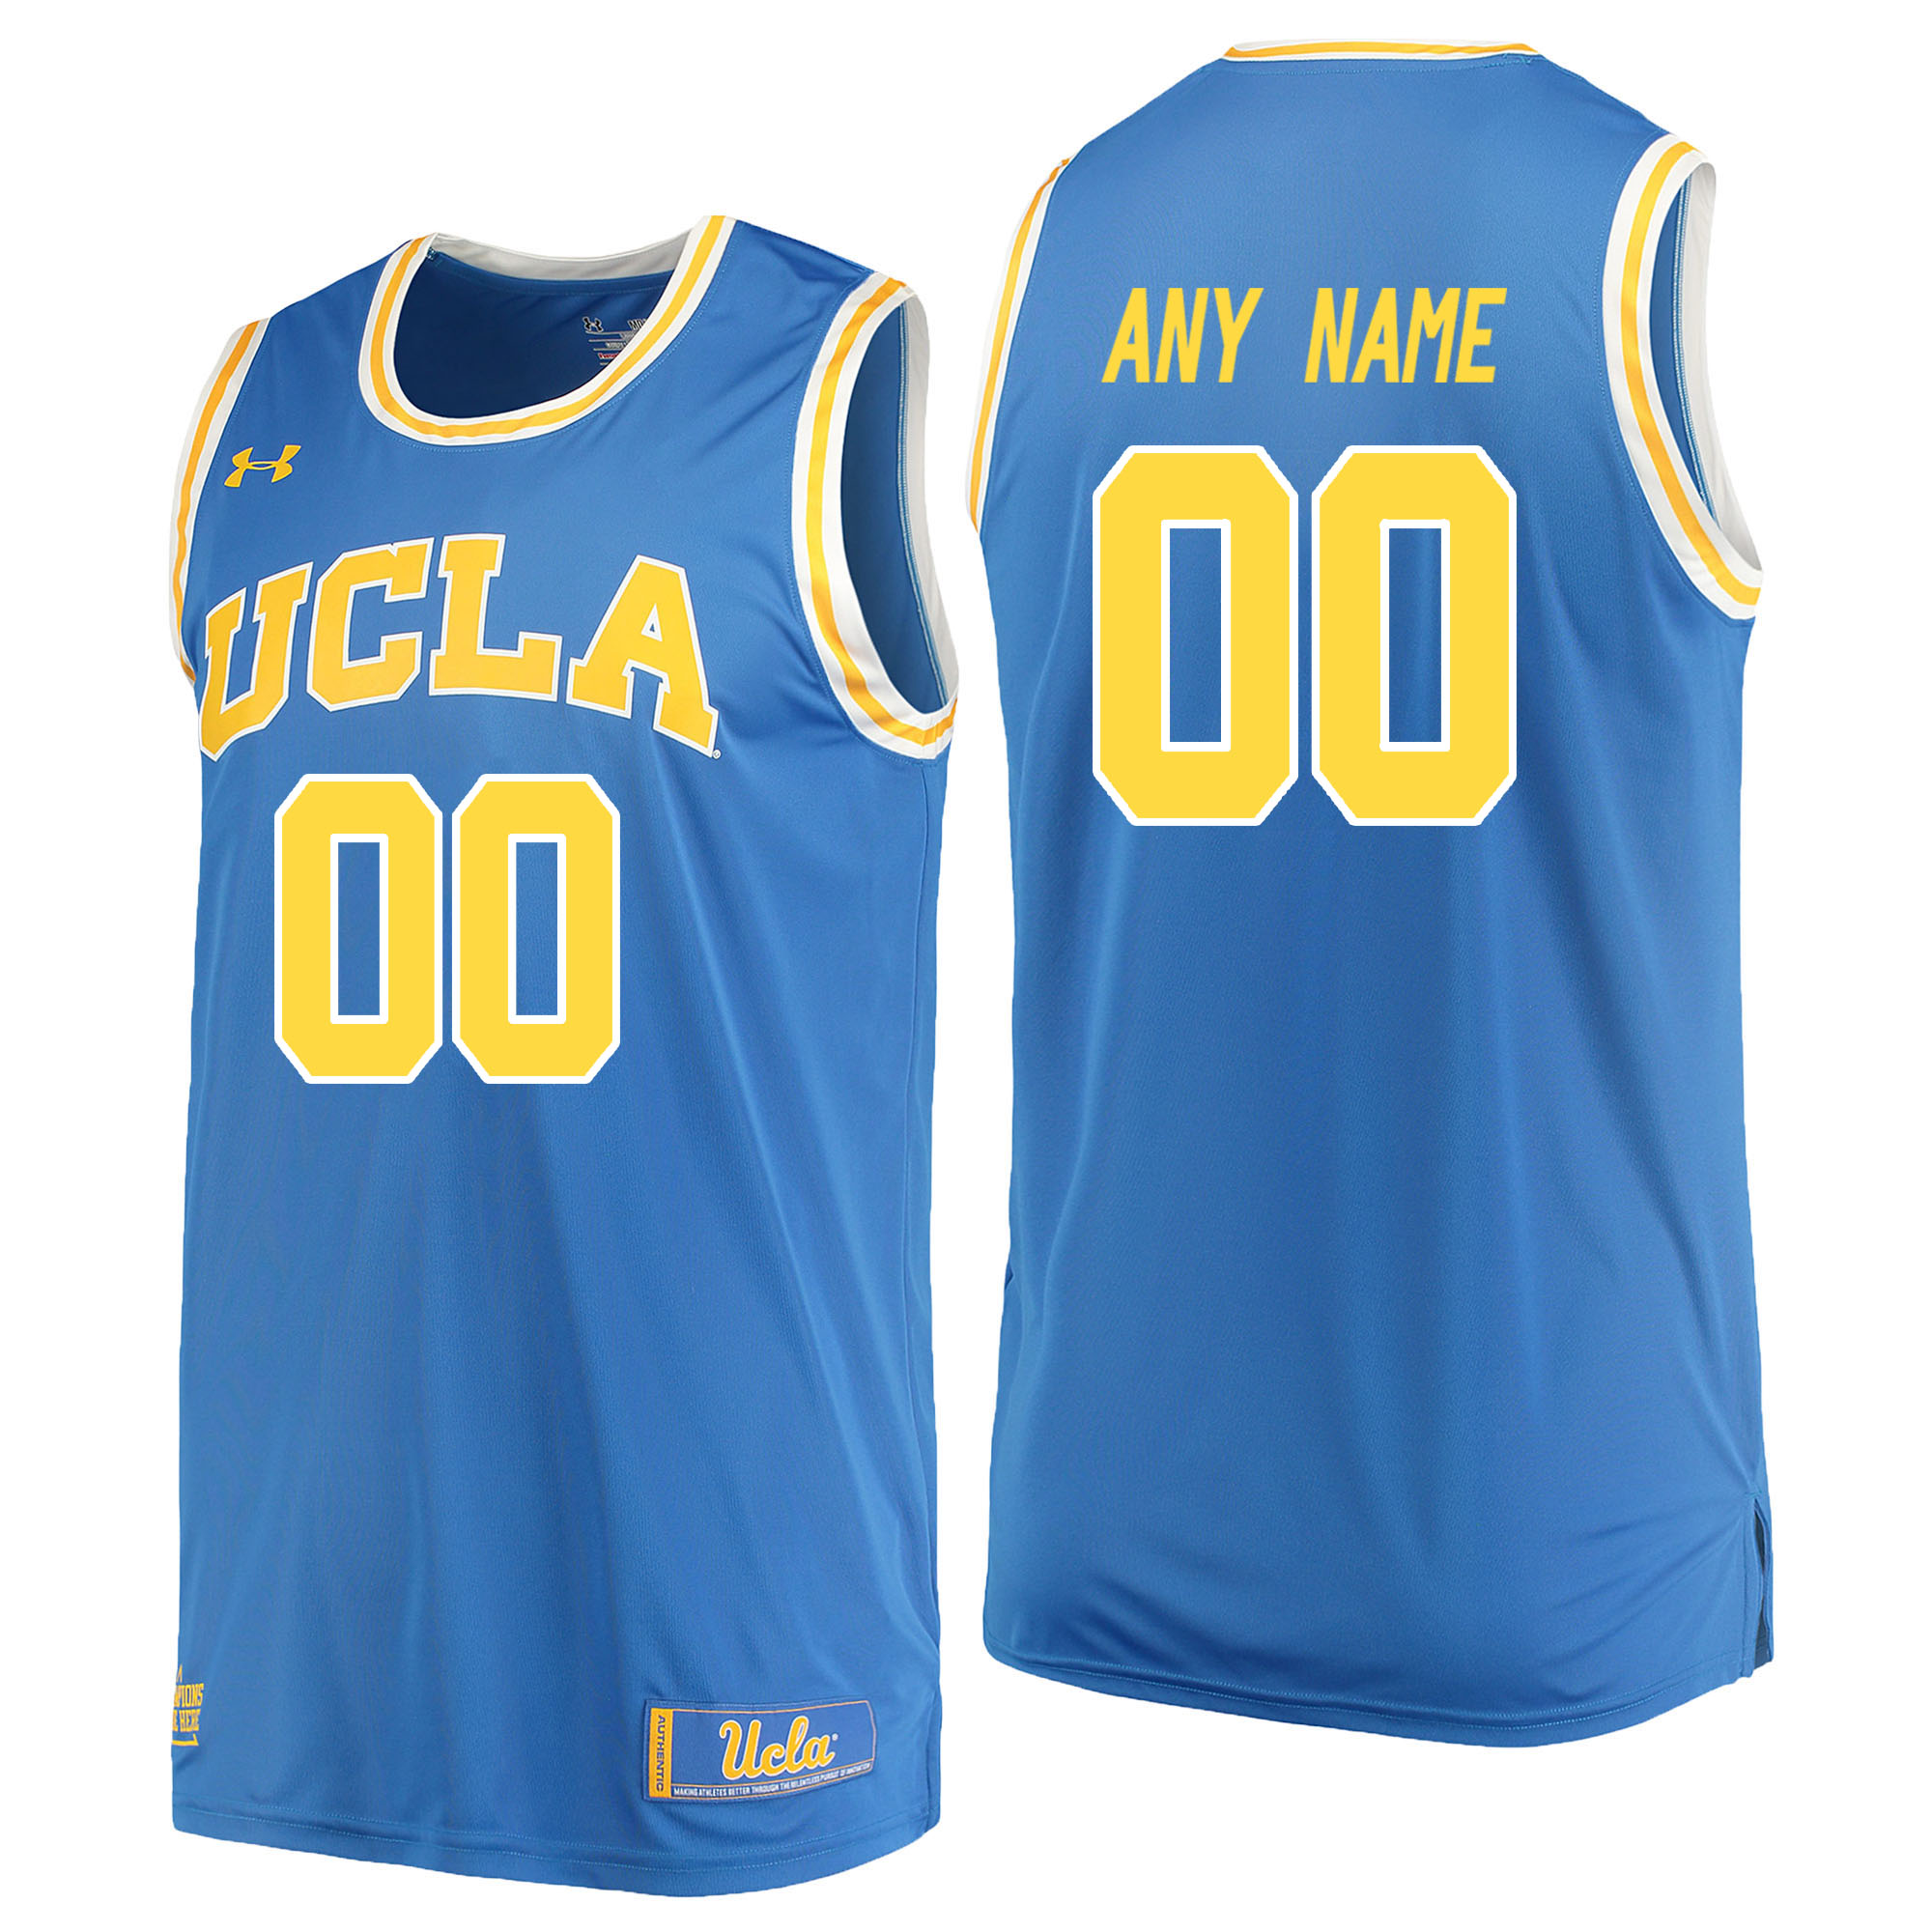 UCLA Bruins Blue Men's Customized College Basketball Jersey